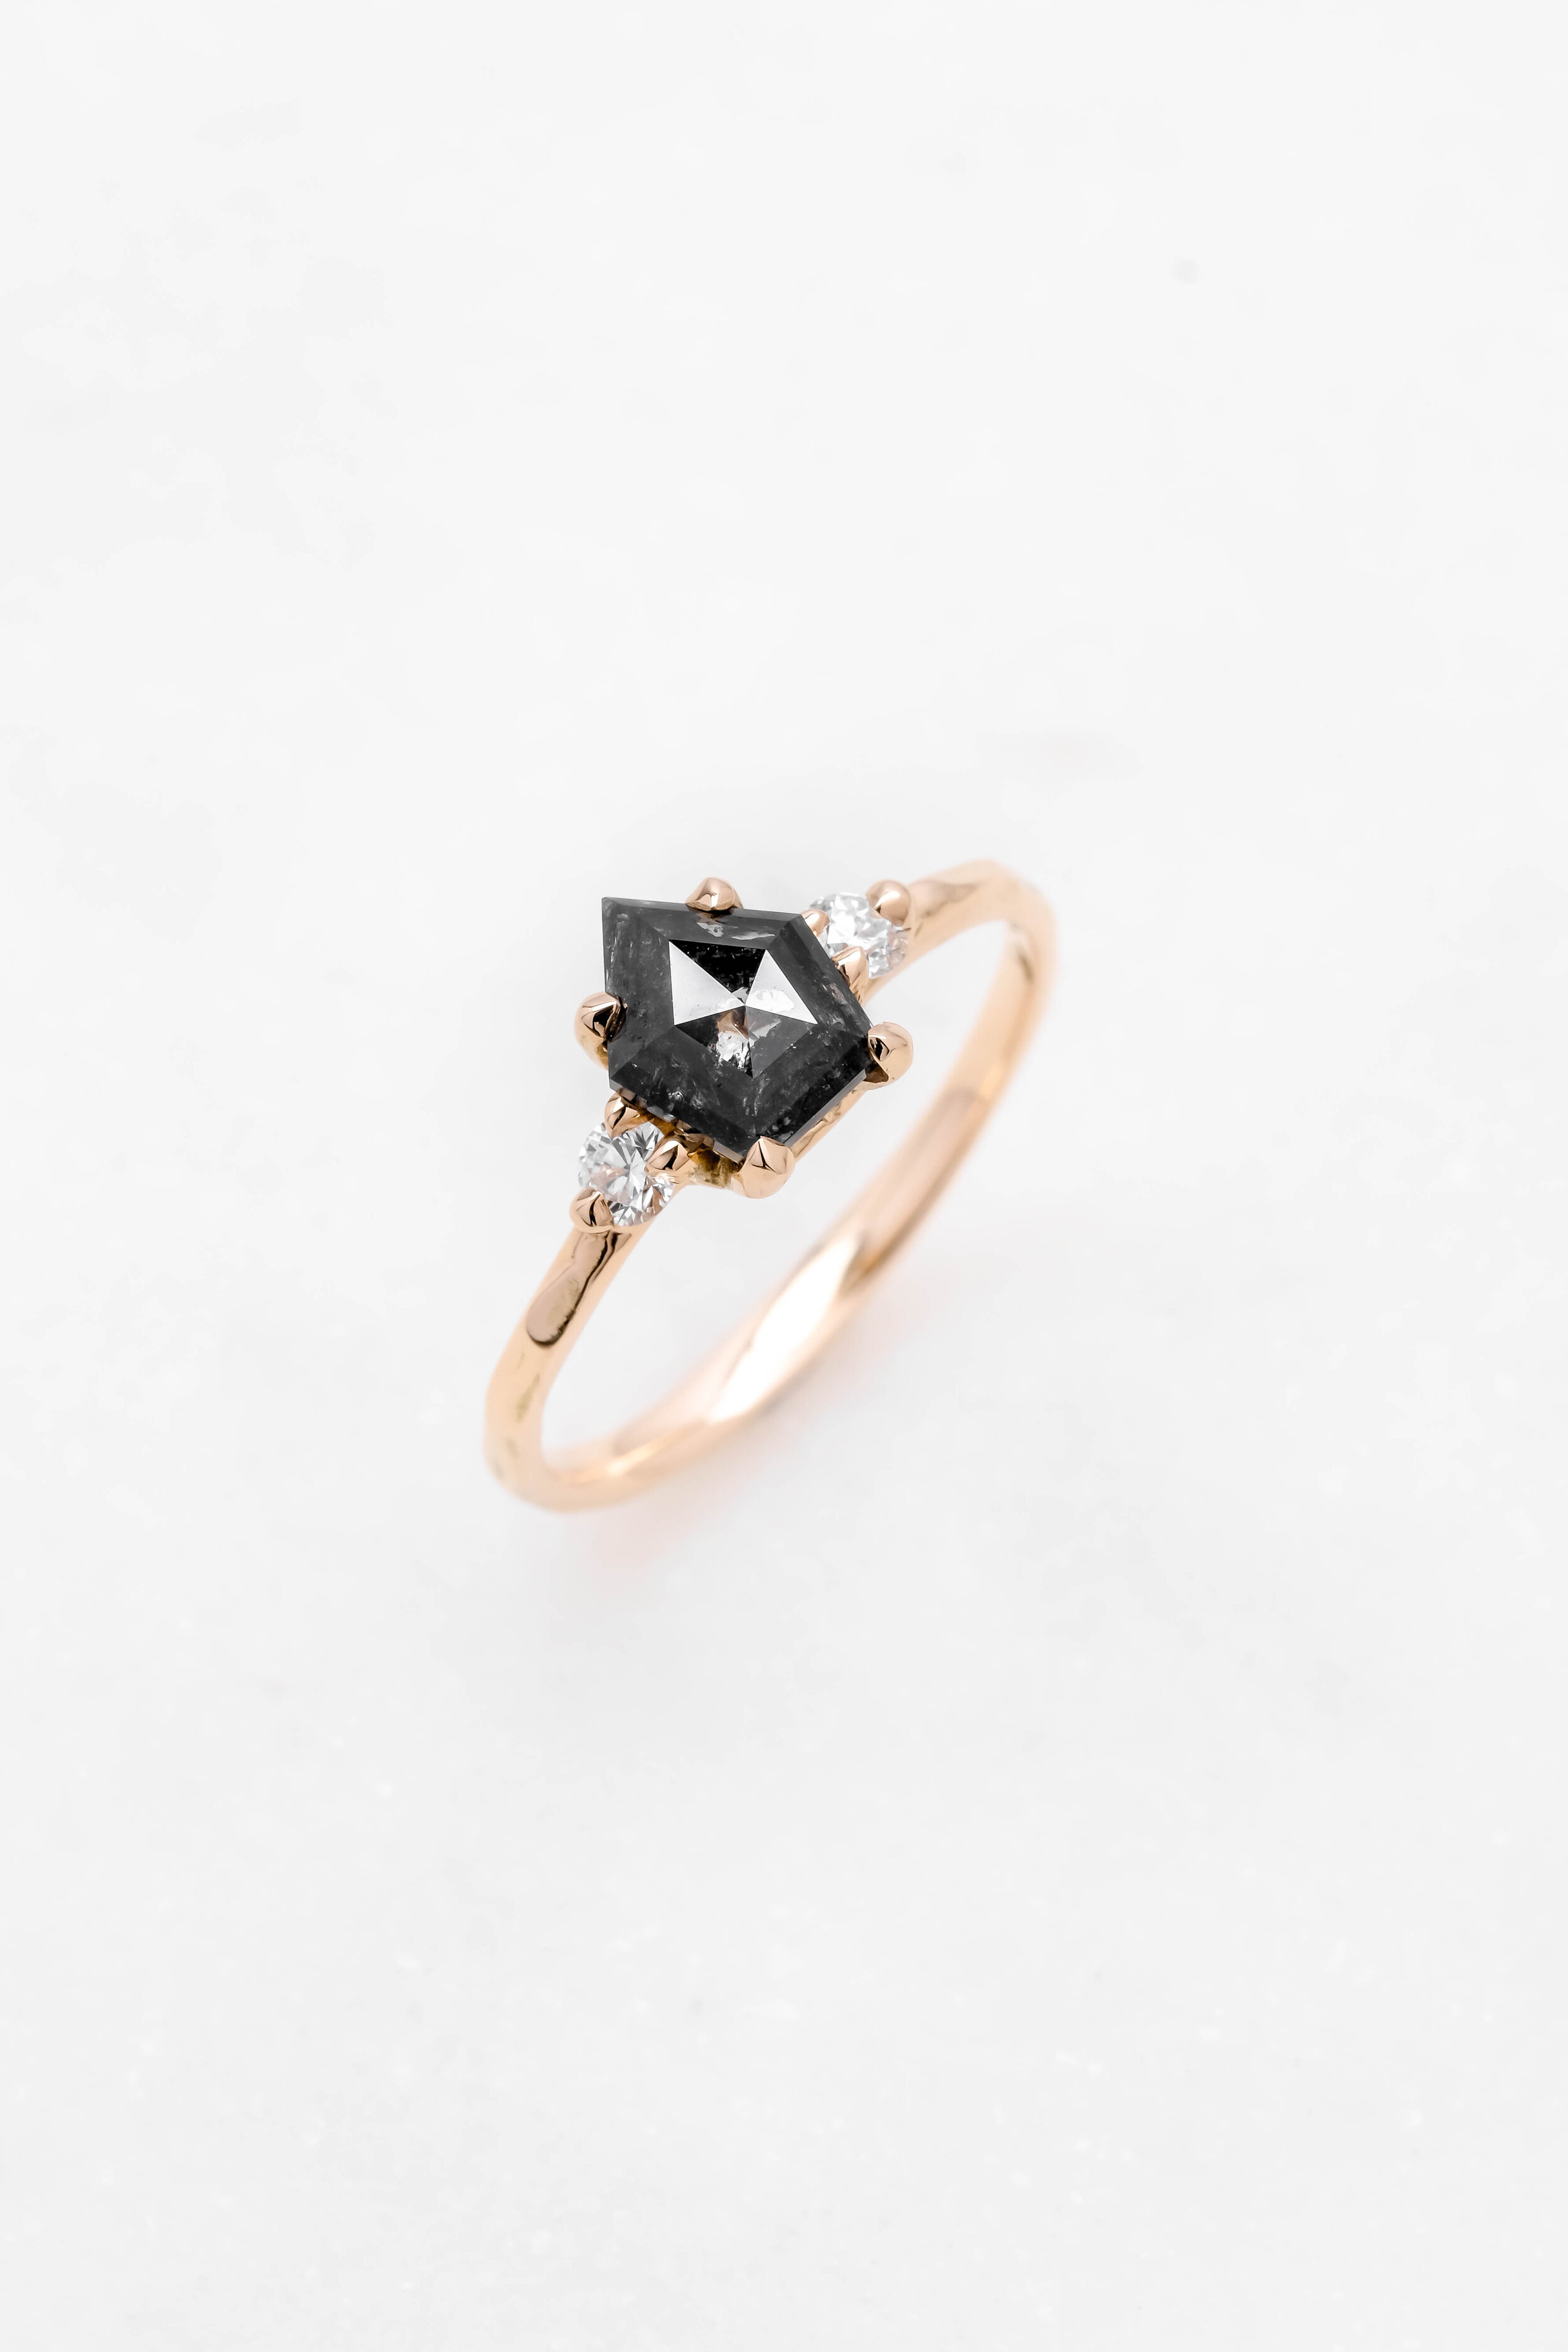 theblackalchemy-jewelry-ring-alchemia-gold-diamond-salt-and-pepper-1.jpg